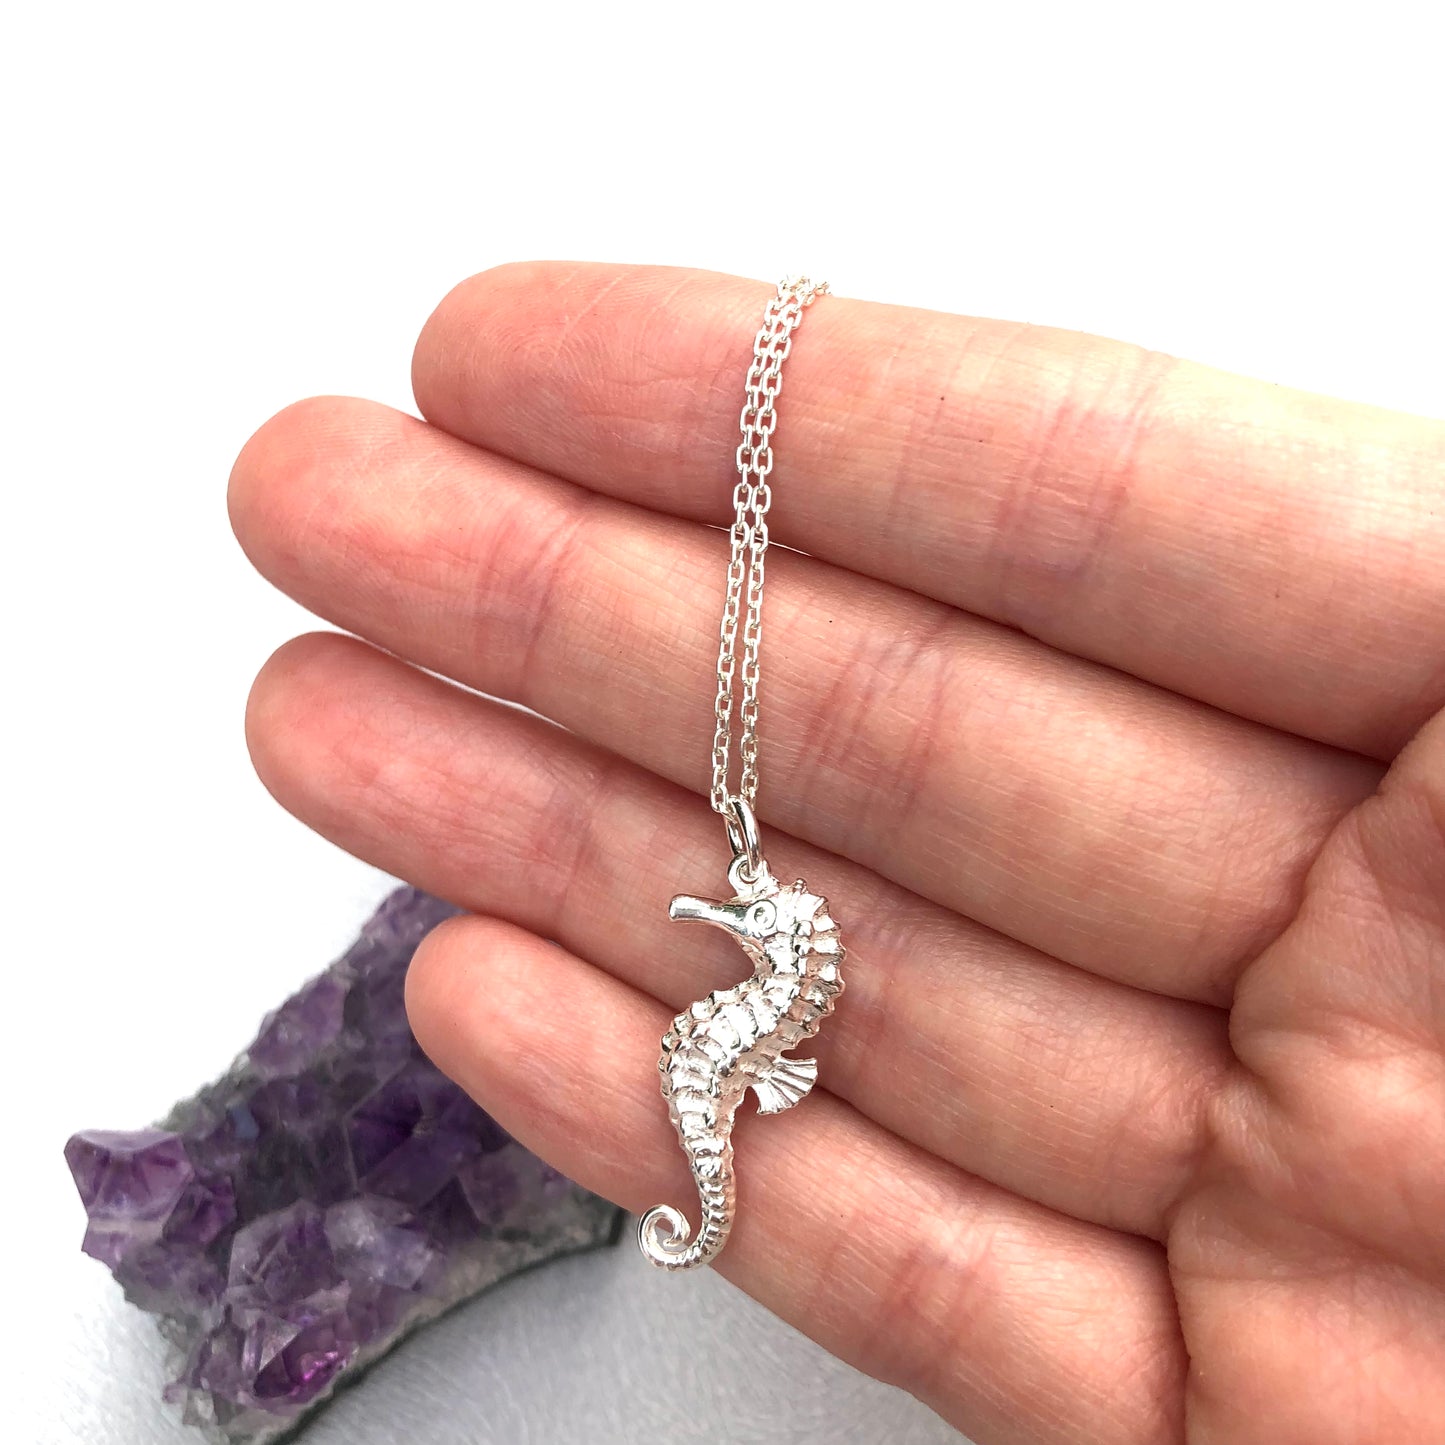 tiny silver seahorse pendant